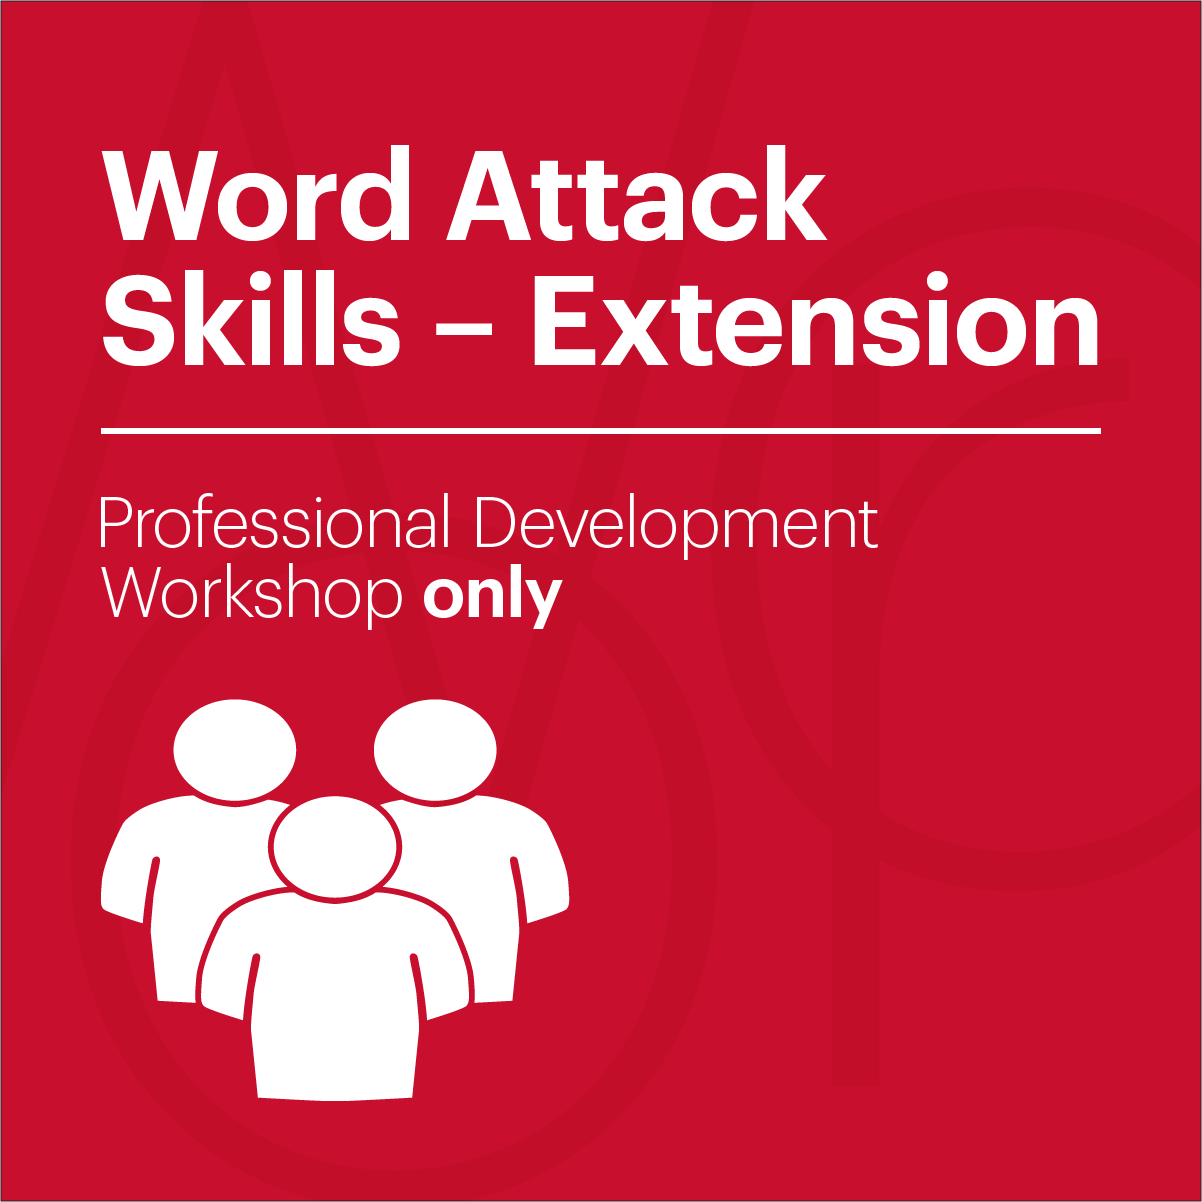 wwsx-word-attack-skills-extension-professional-development-workshop-image01